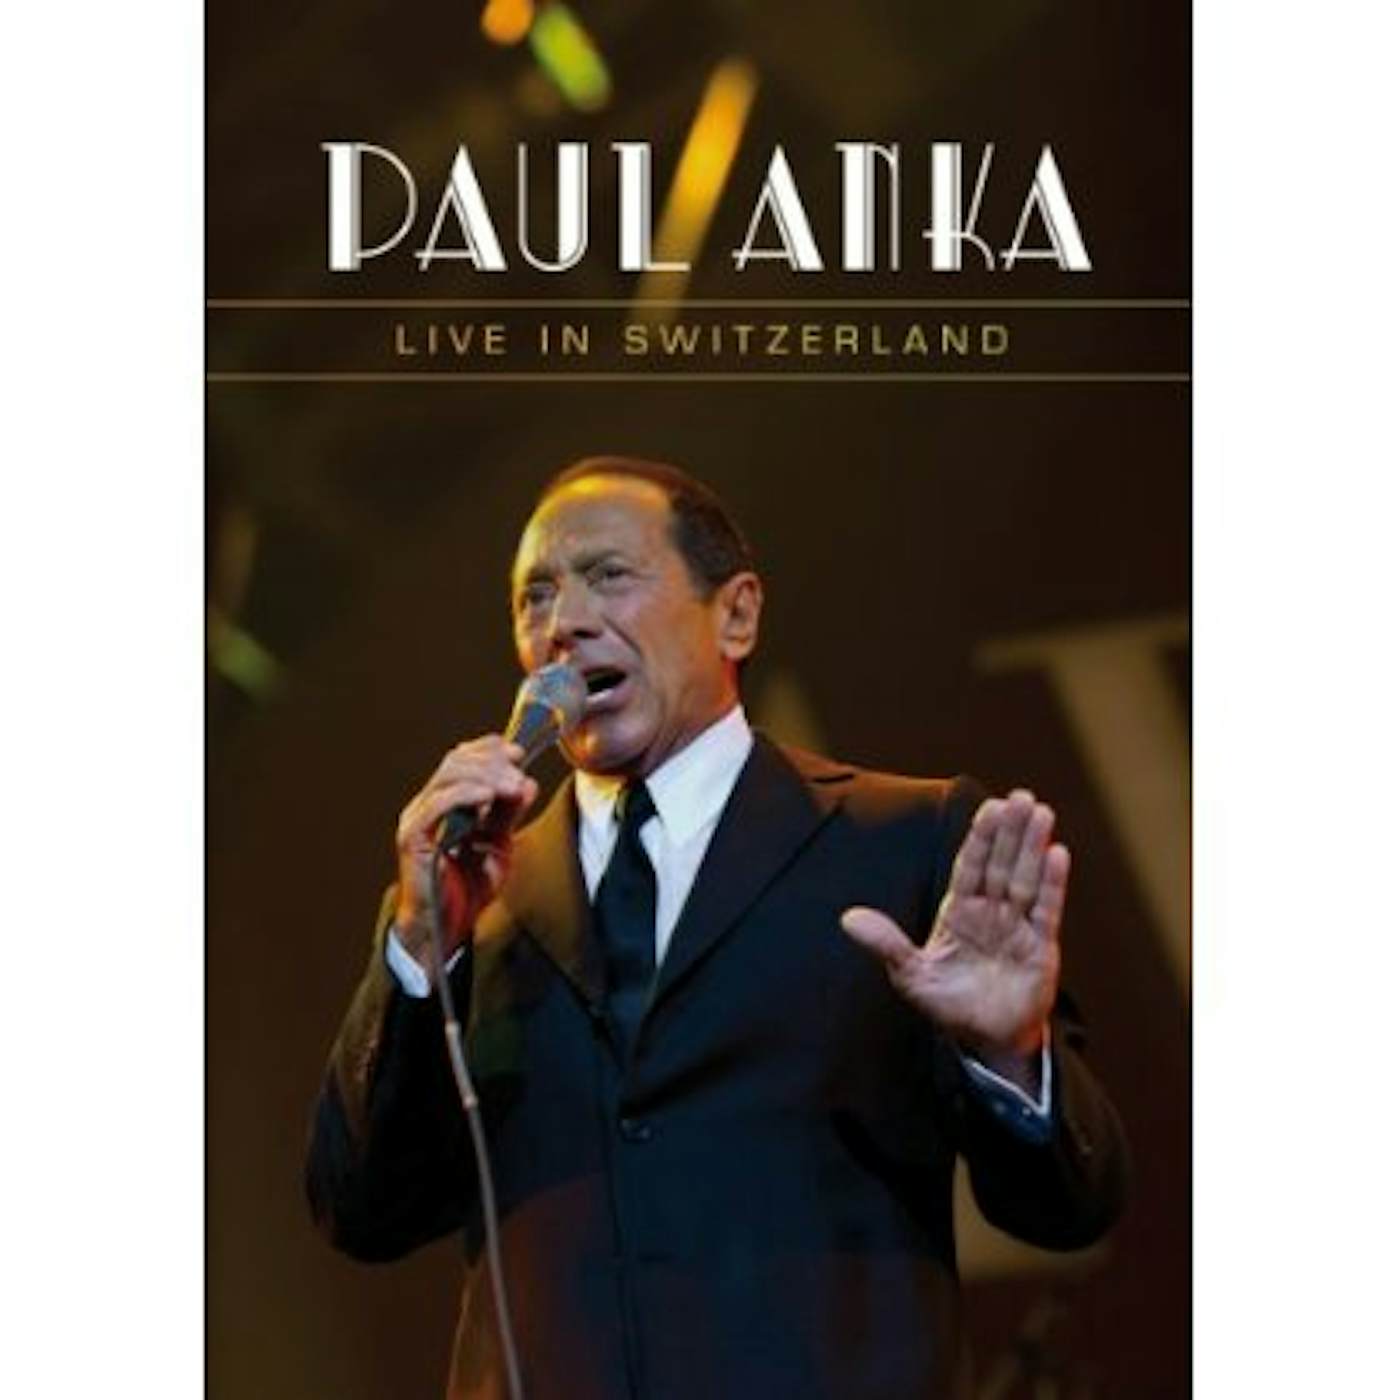 Paul Anka LIVE IN SWITZERLAND DVD